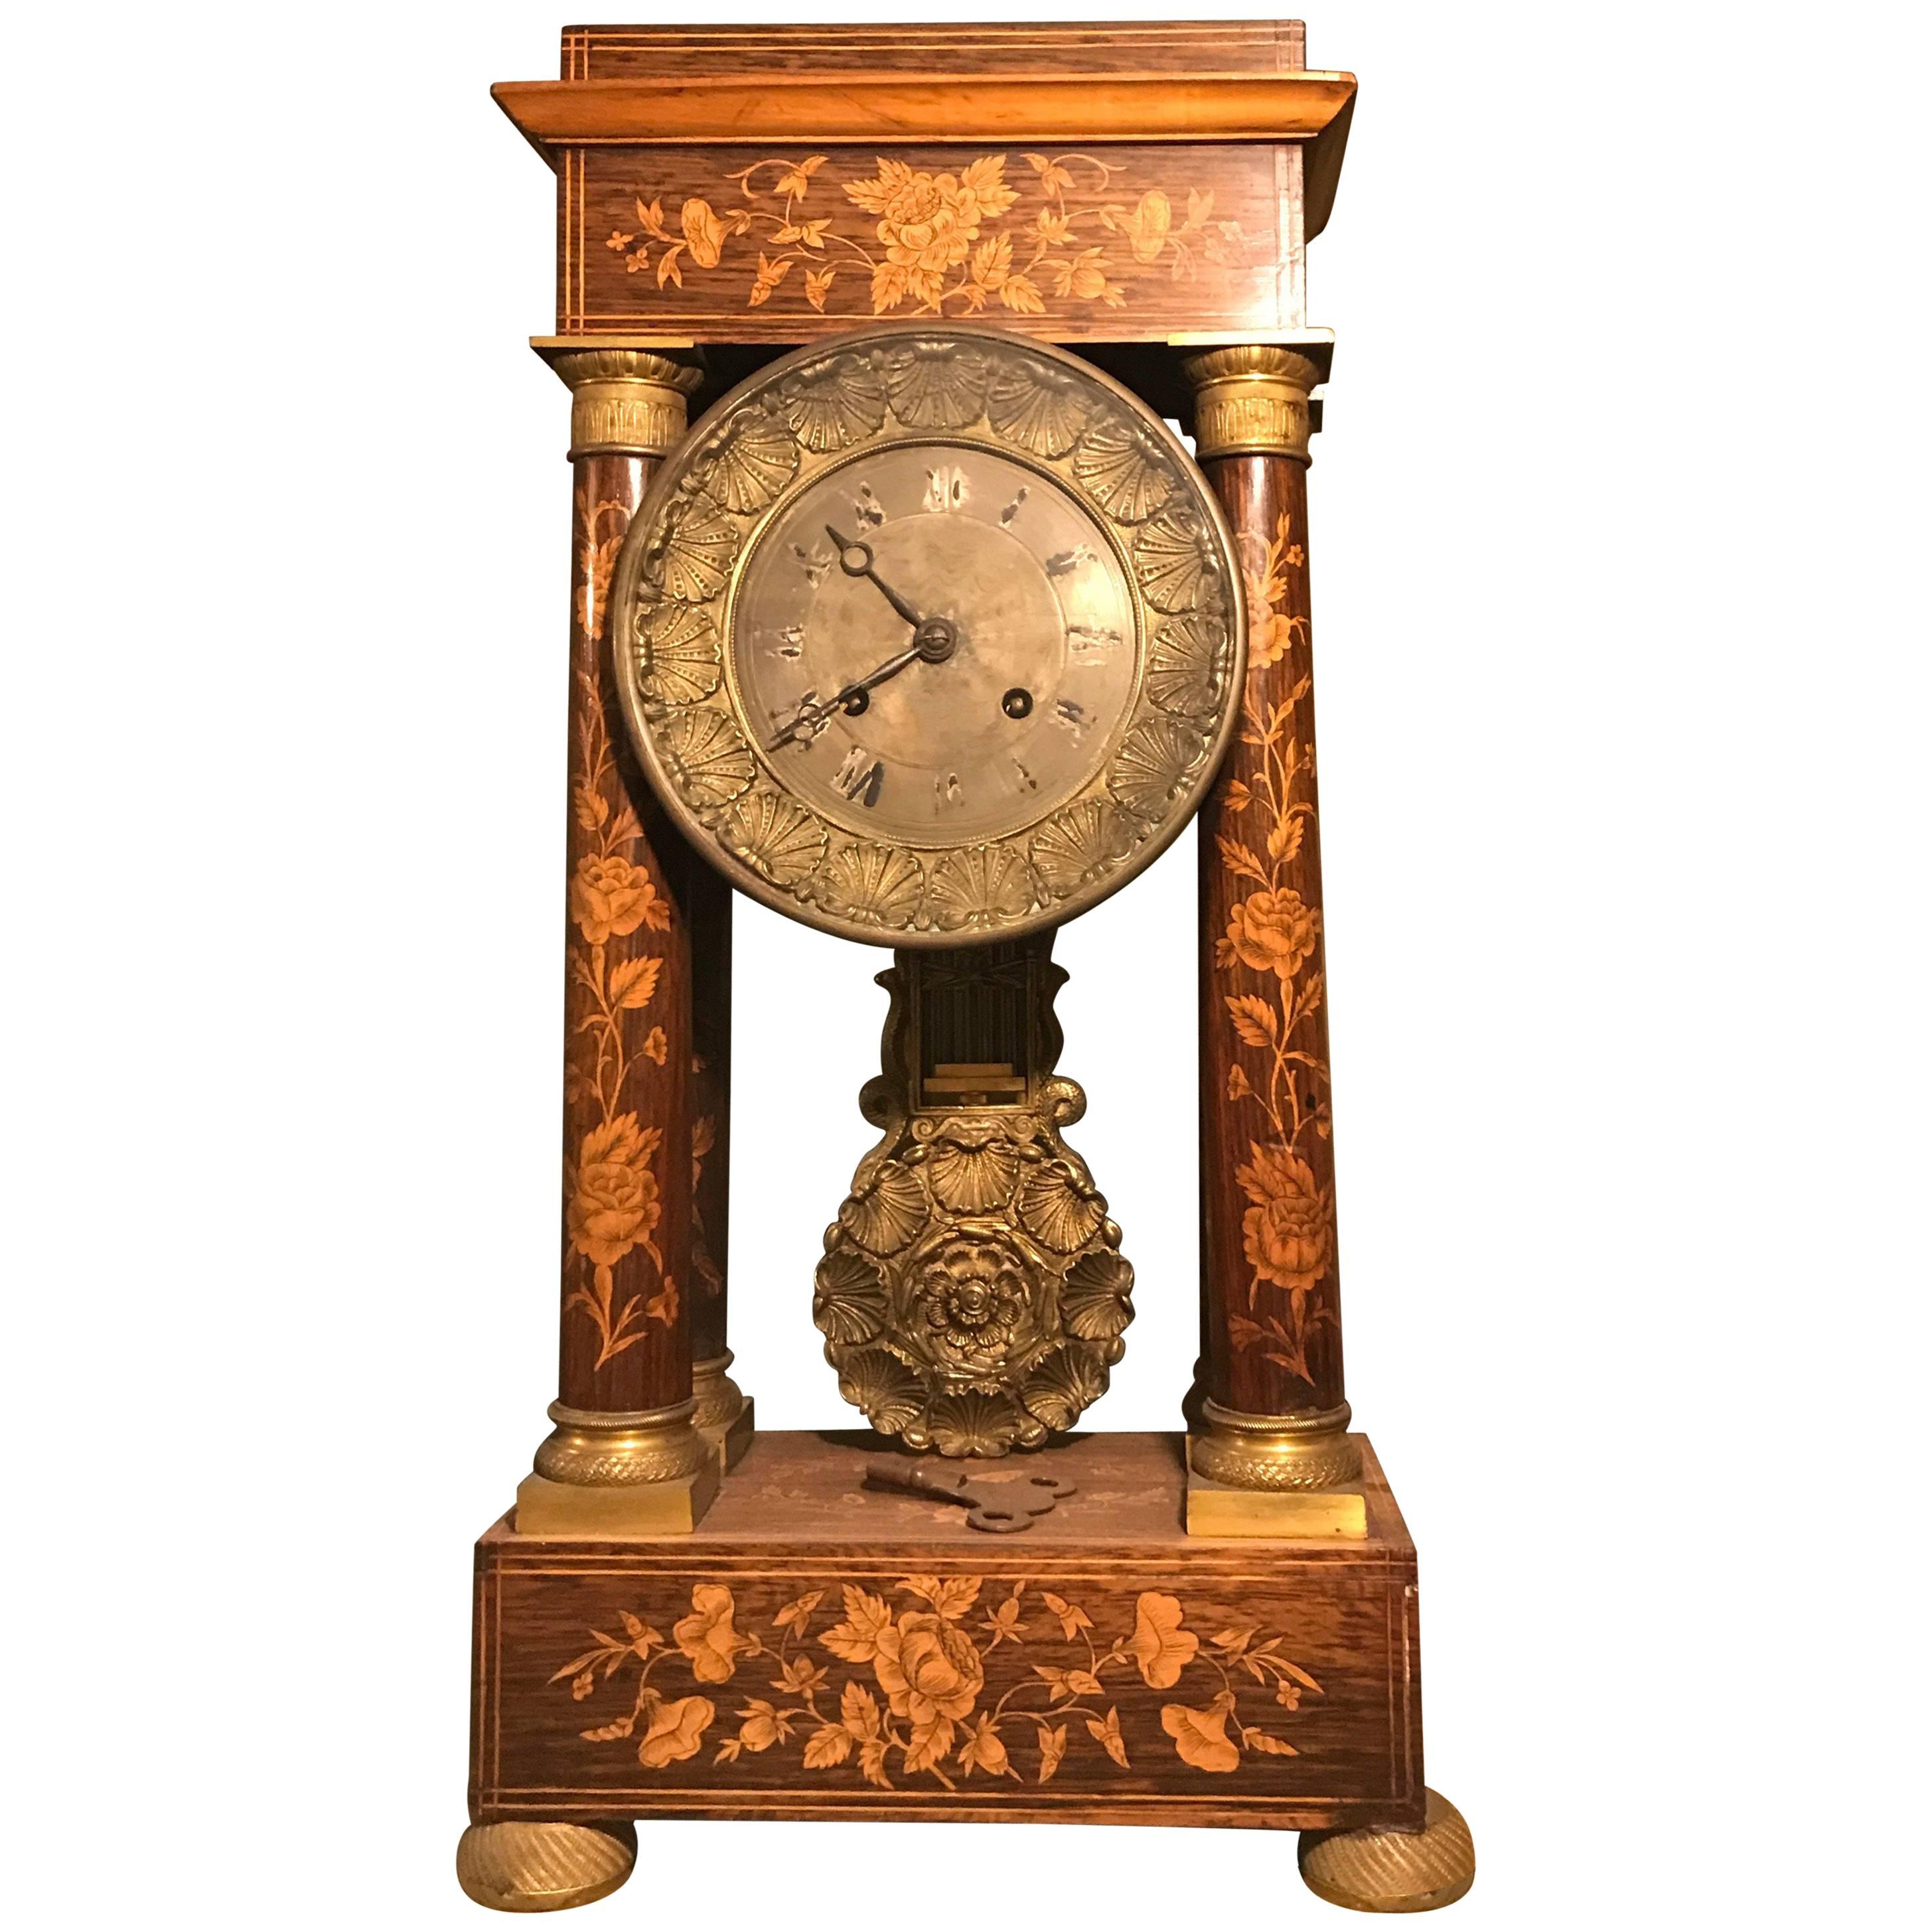 Marquetry Empire 1810 Mantelpiece Clock Original , Complete in working condition